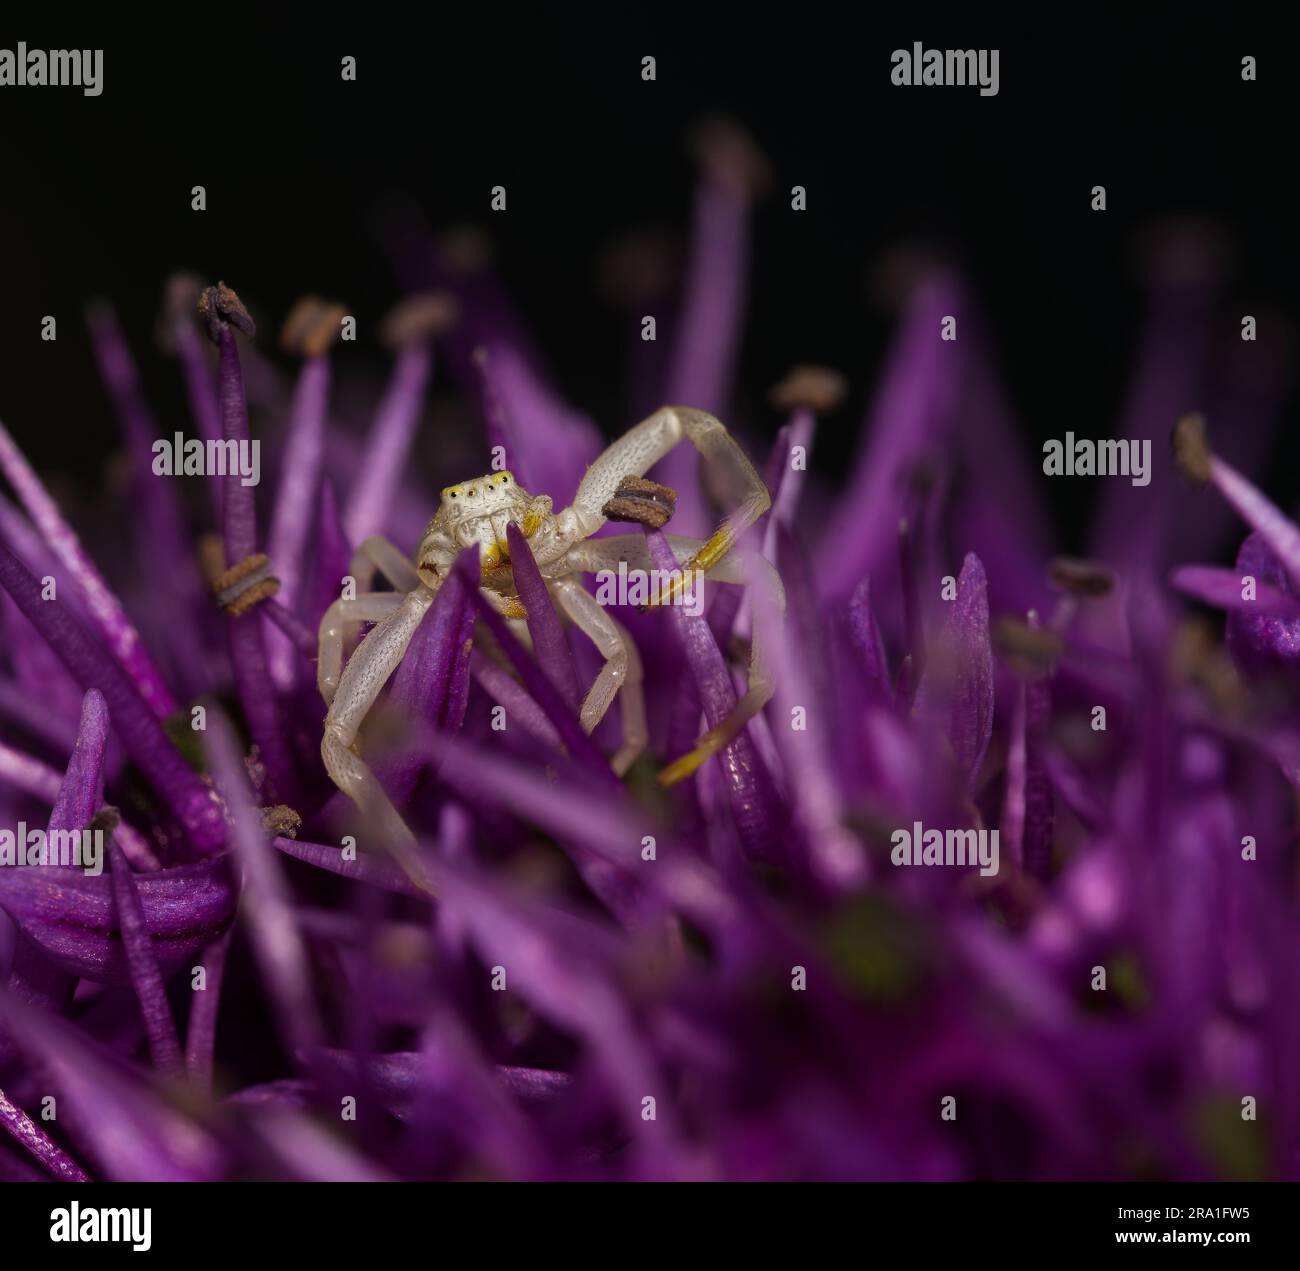 Krabbenspinne auf violetter Blume Stockfoto